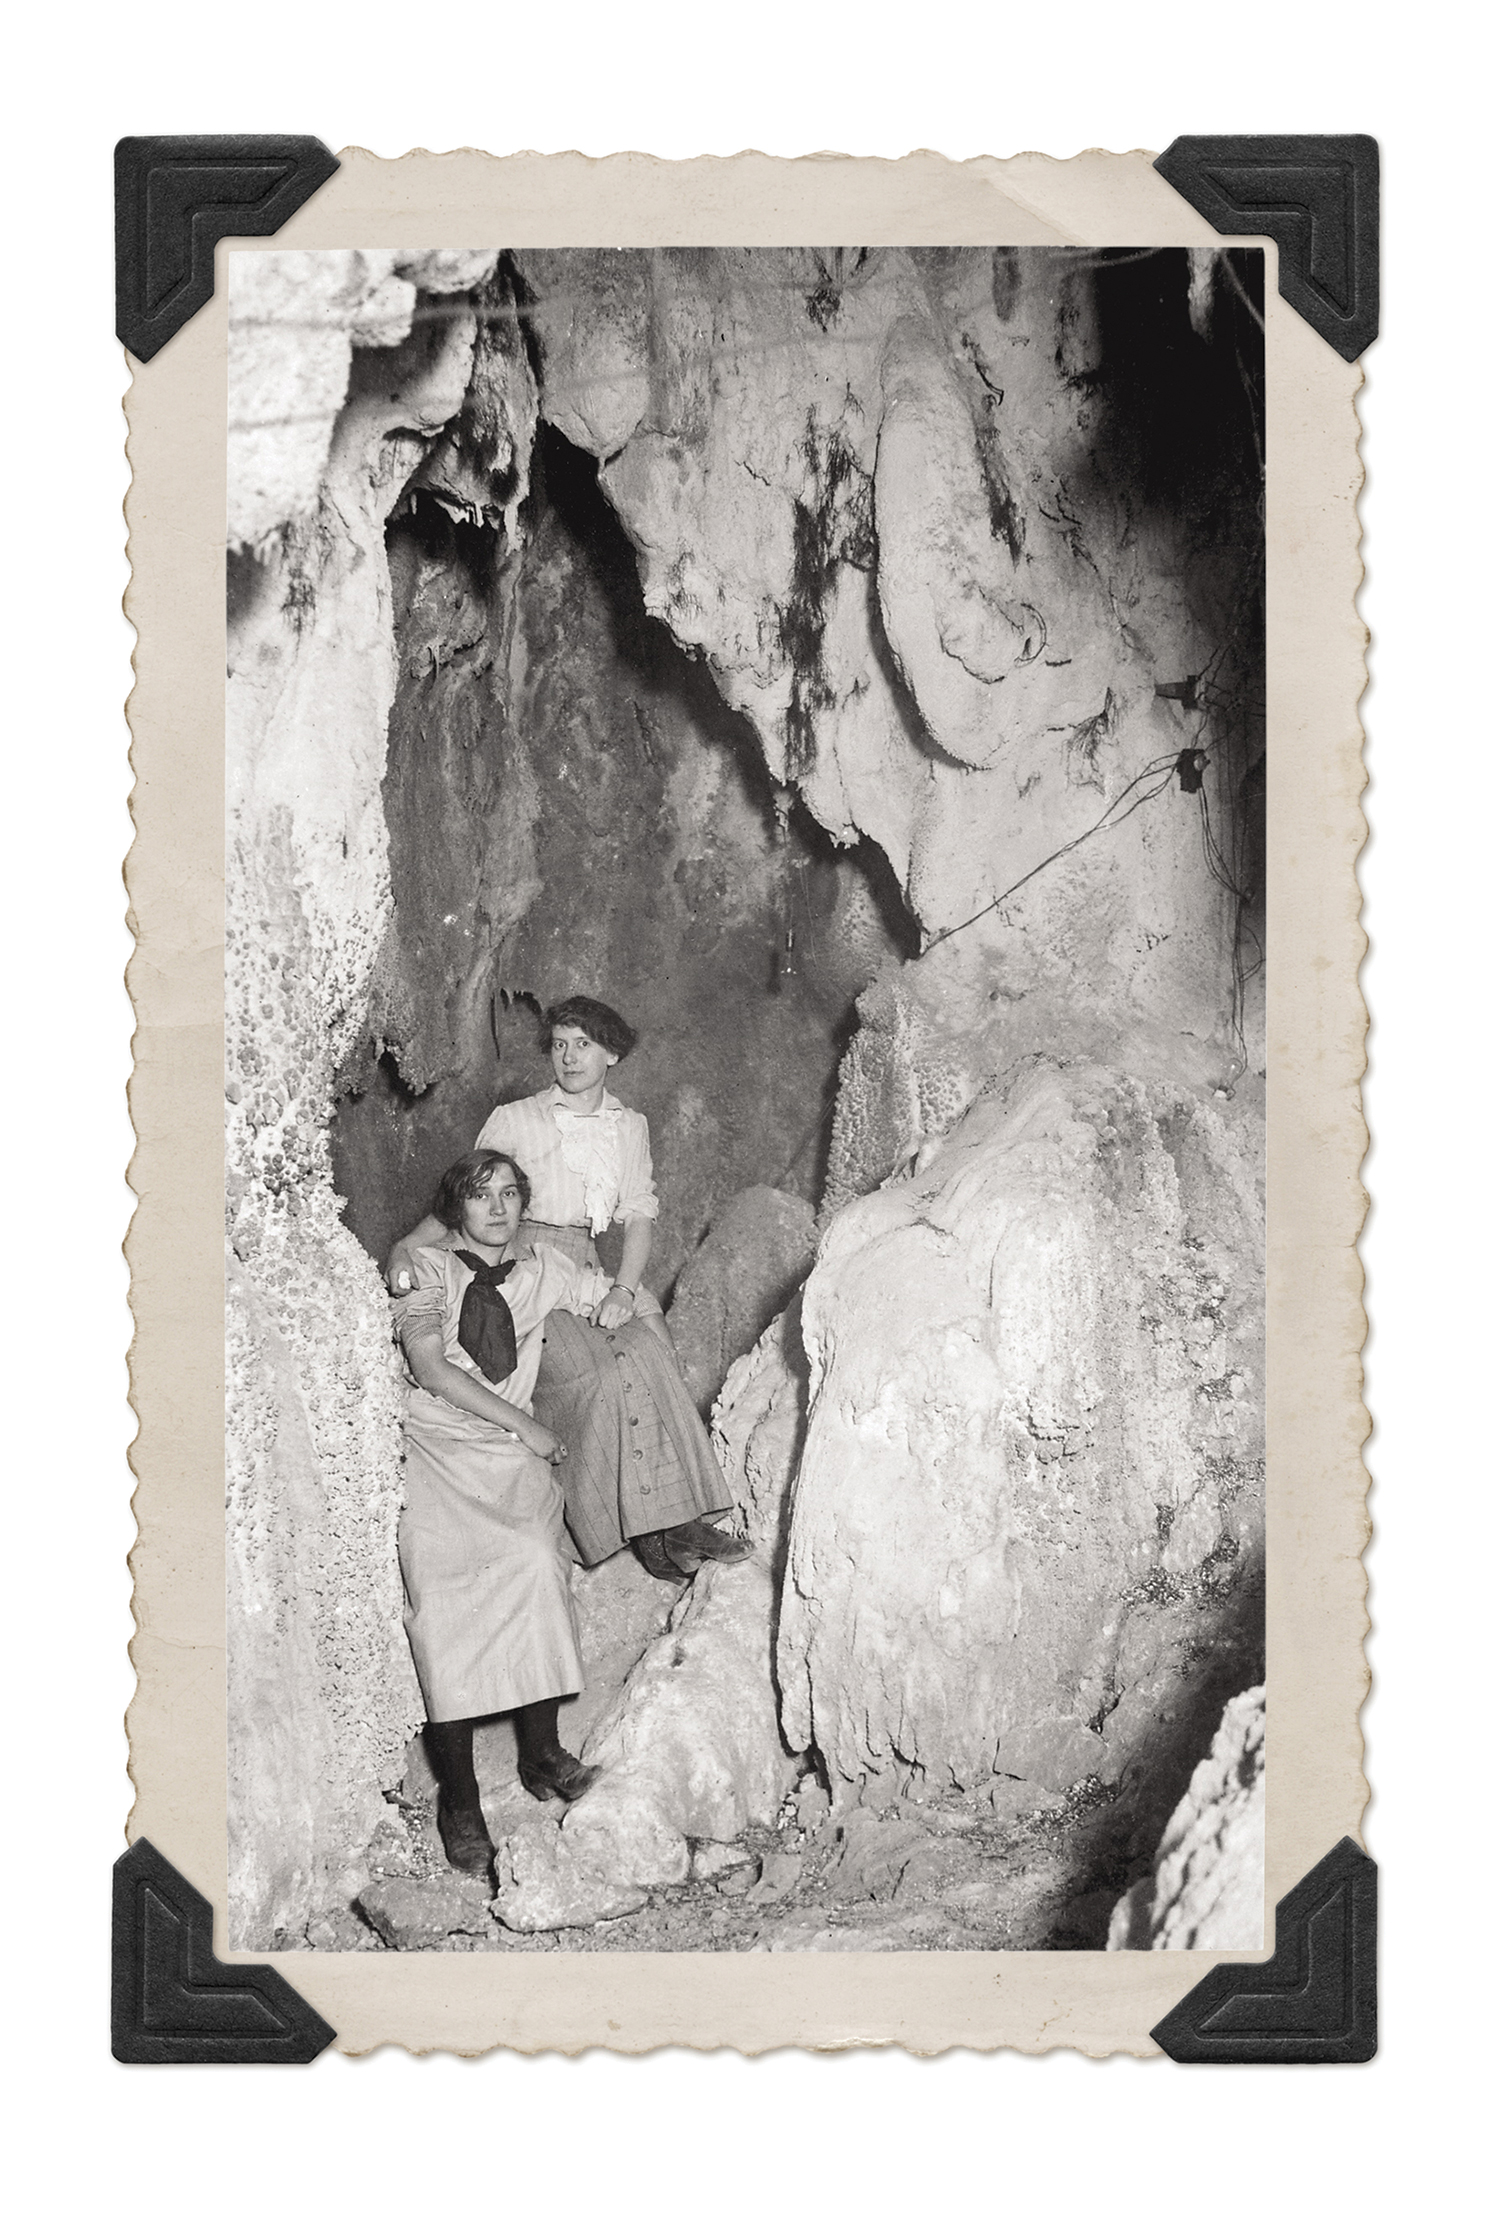 Fairy caves in Glenwood Springs, CO